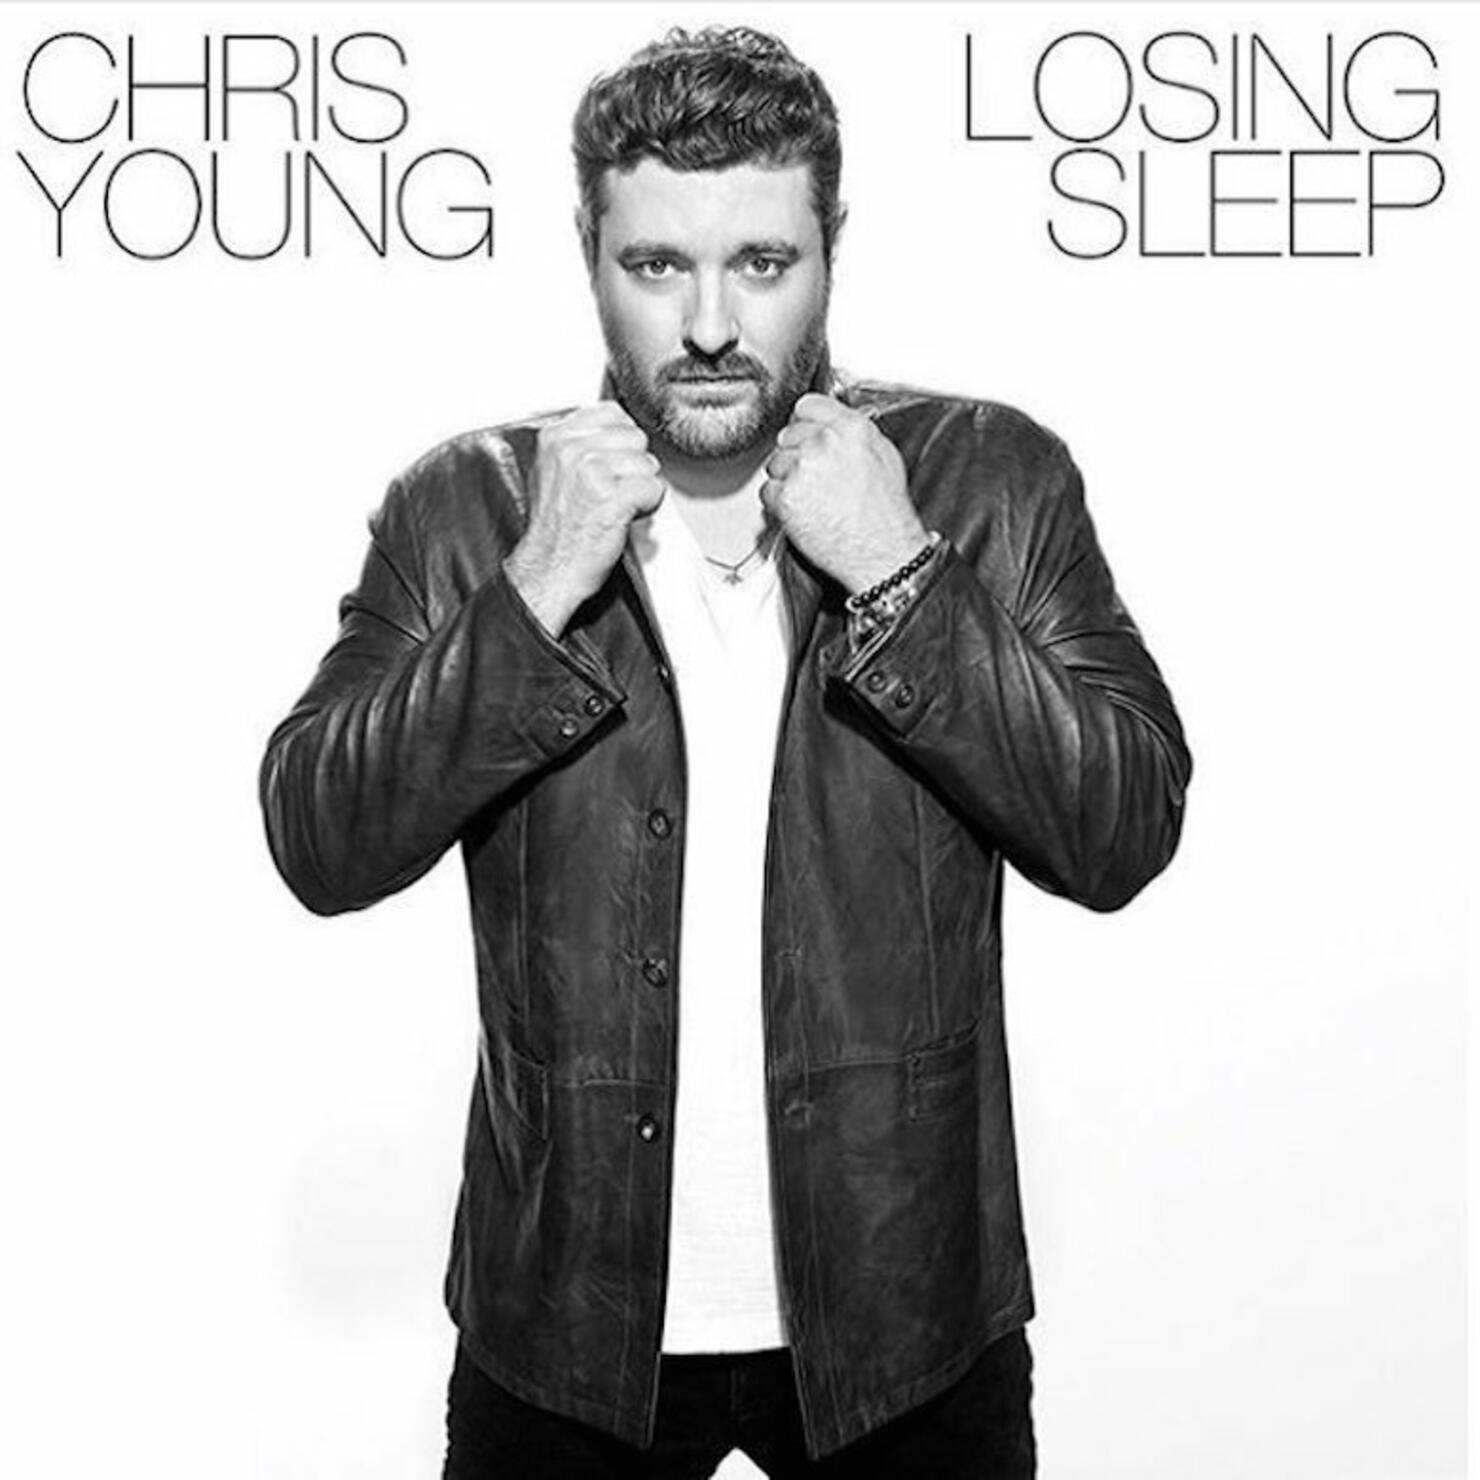 Chris Young - 'Losing Sleep'